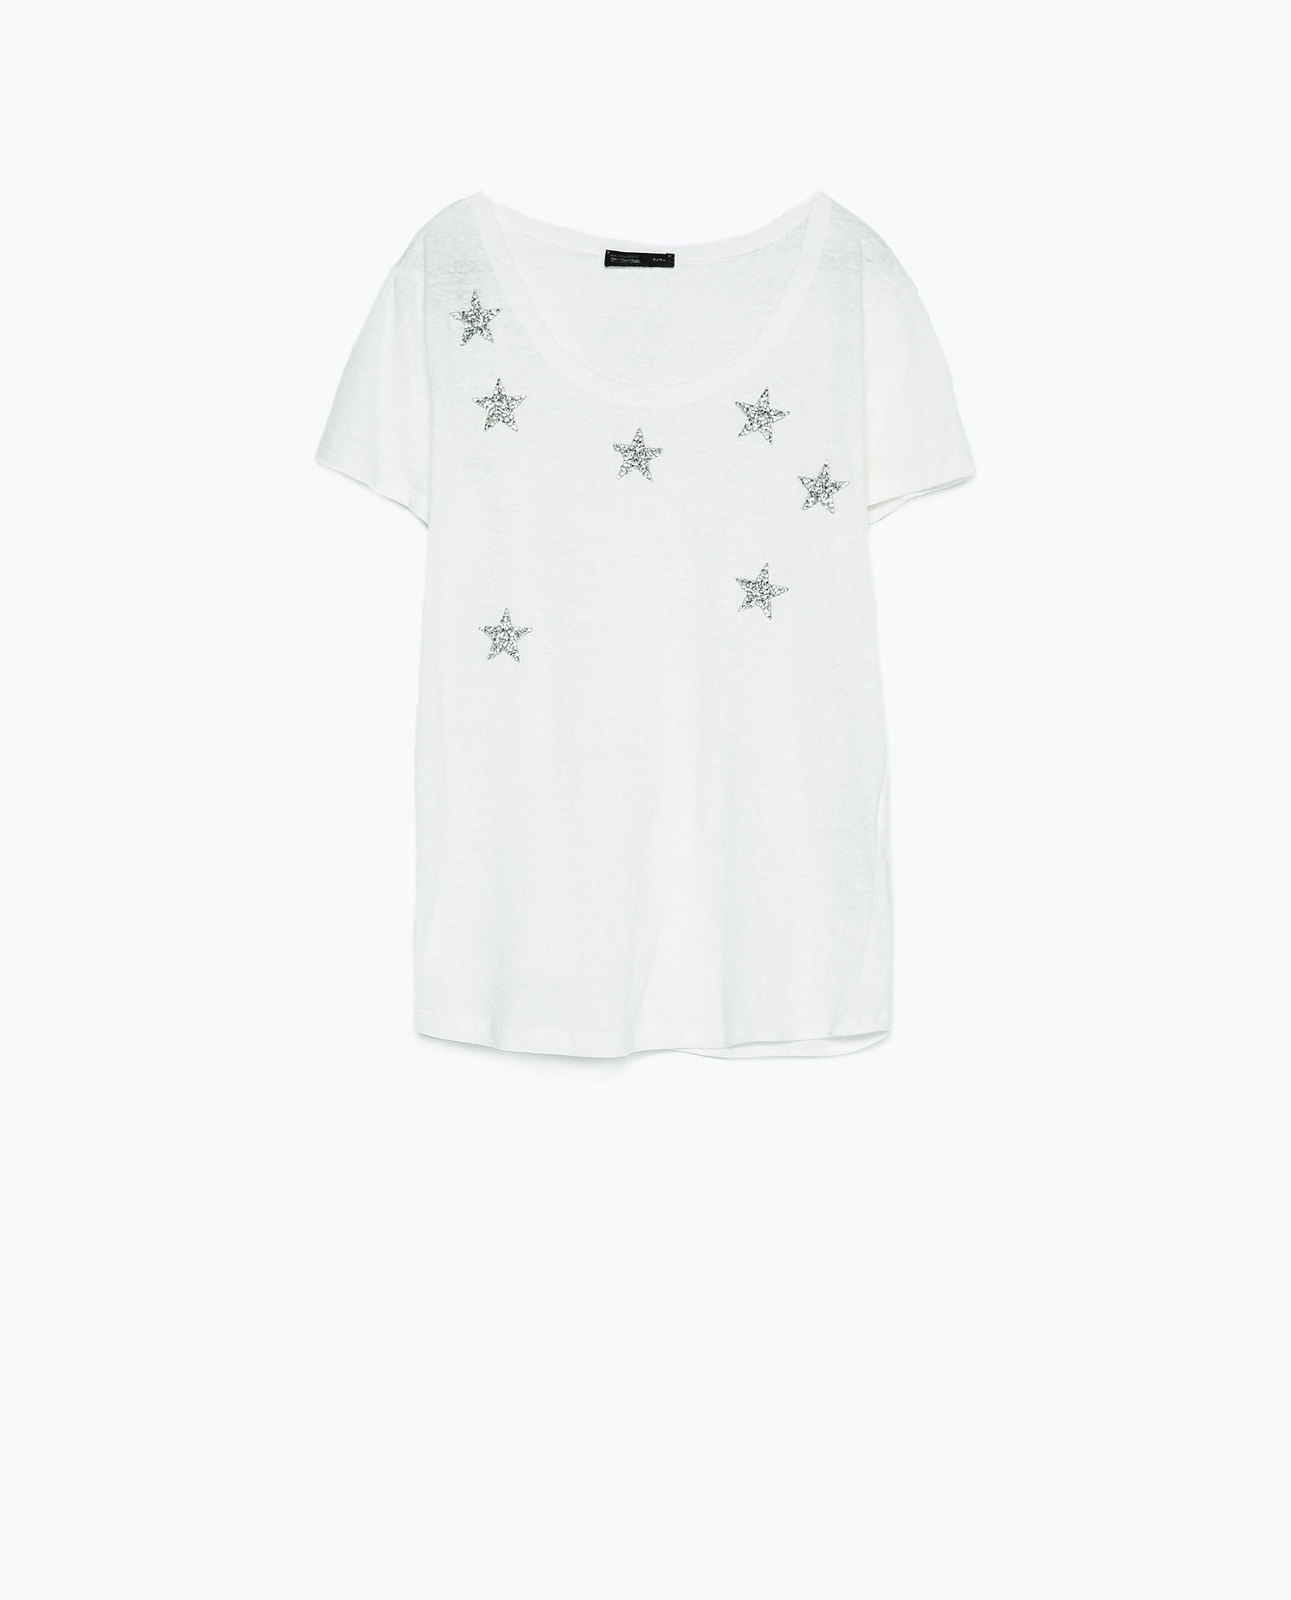 Zara csillagos fehér T-shirt 2015.02.23 #74916 fotója